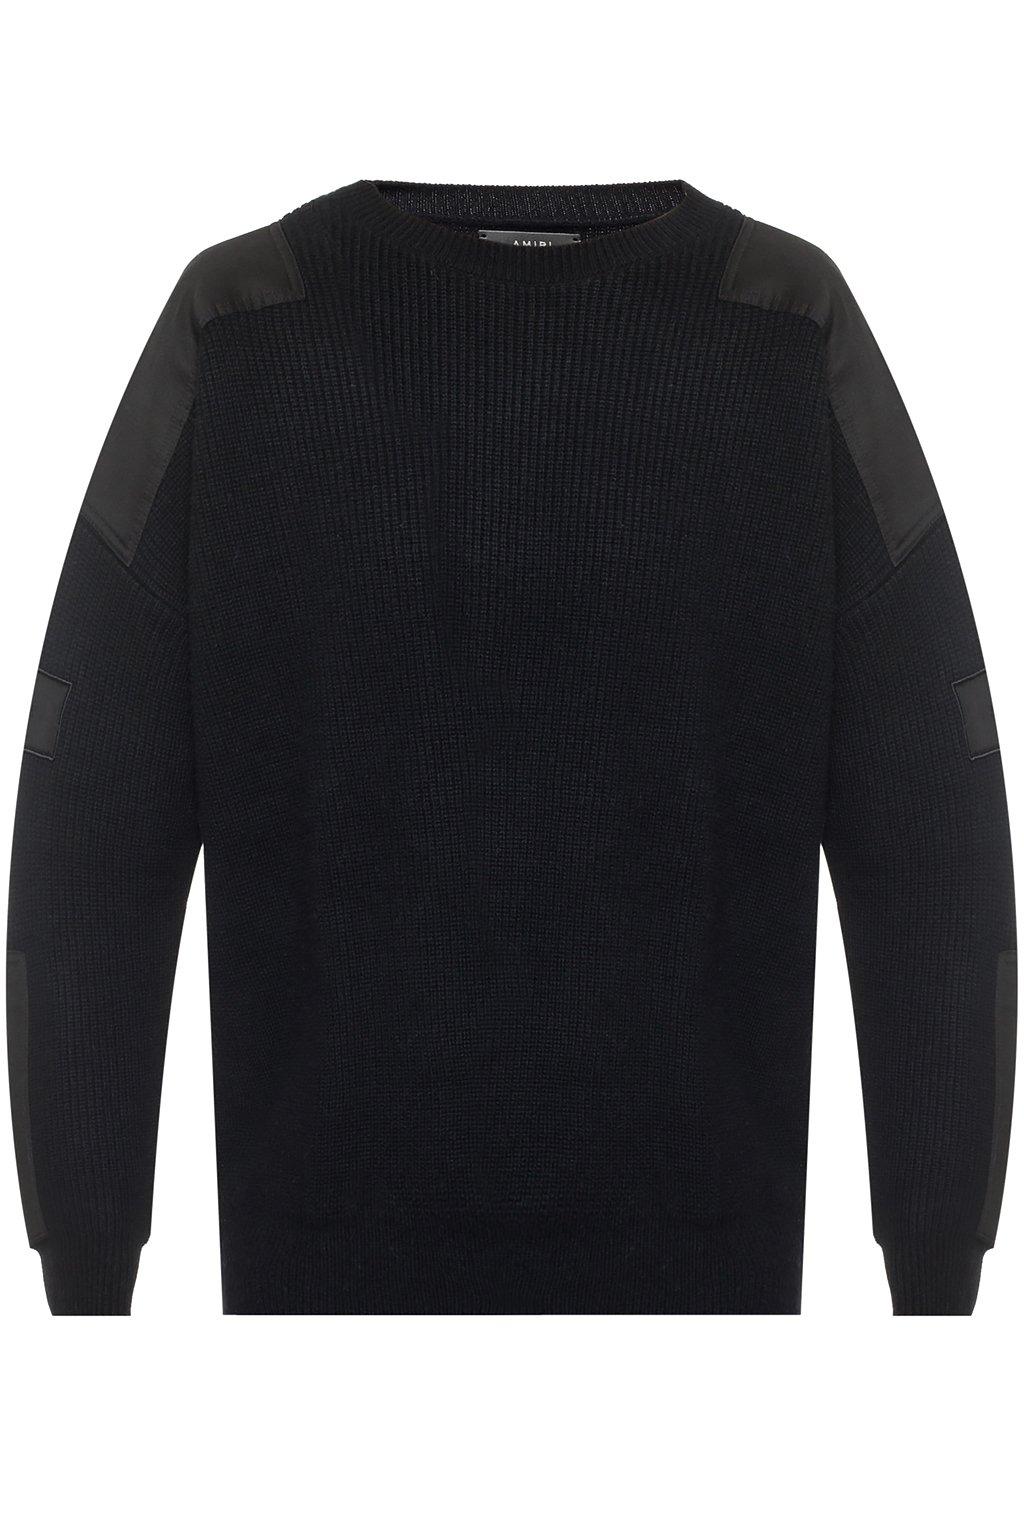 Amiri Wool Crewneck Sweater in Black for Men - Lyst